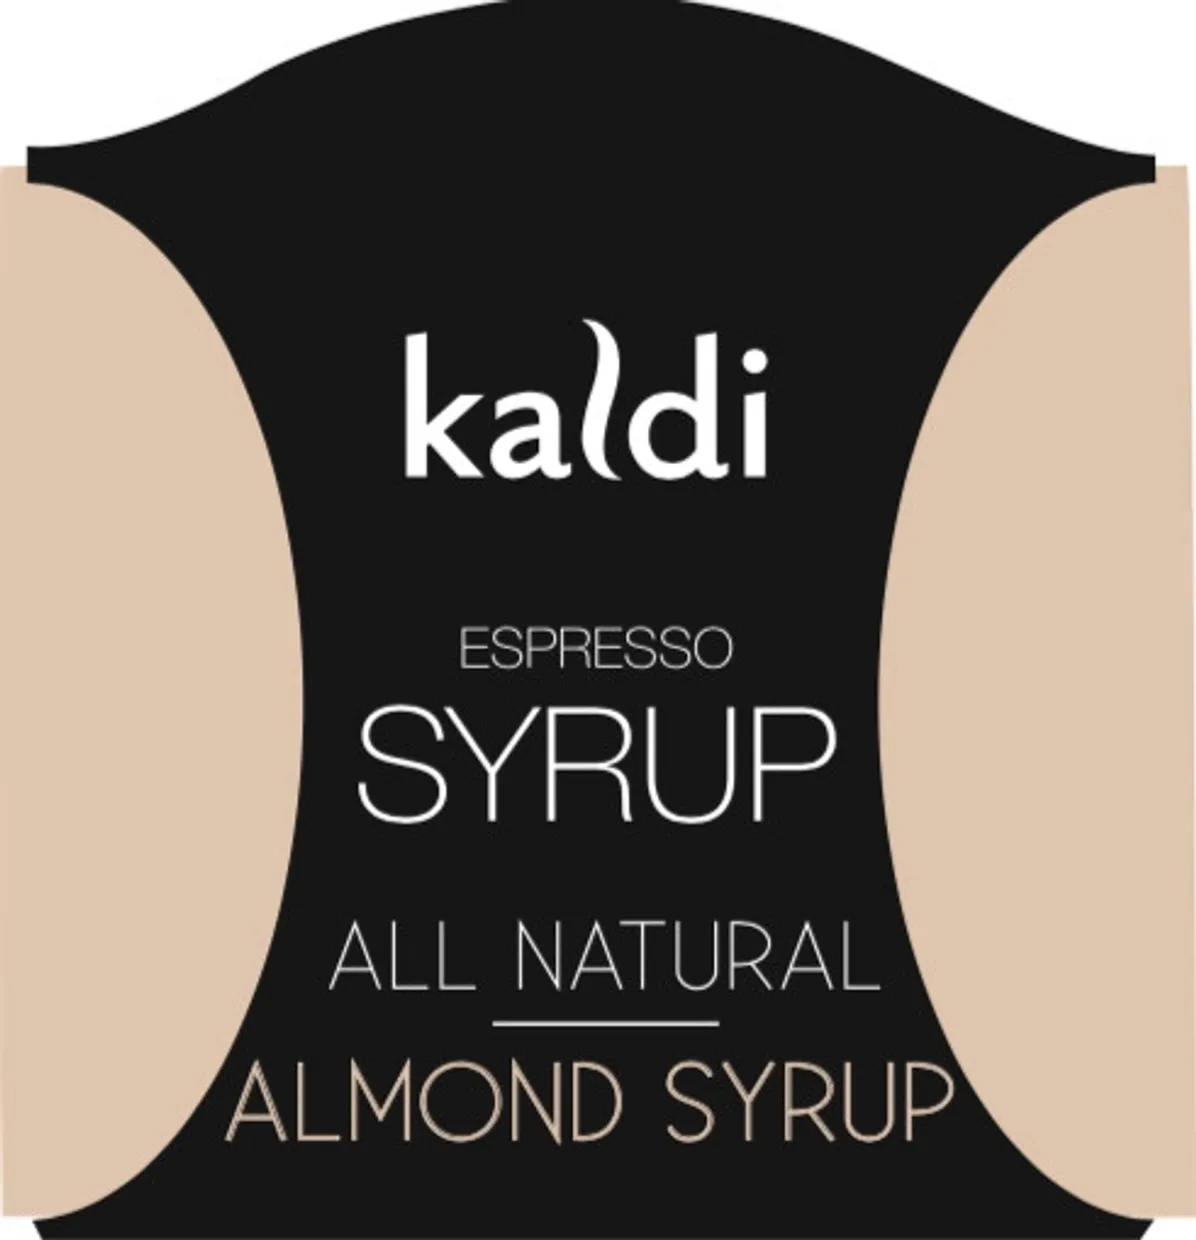 Coffee Syrup Almond - 100ml